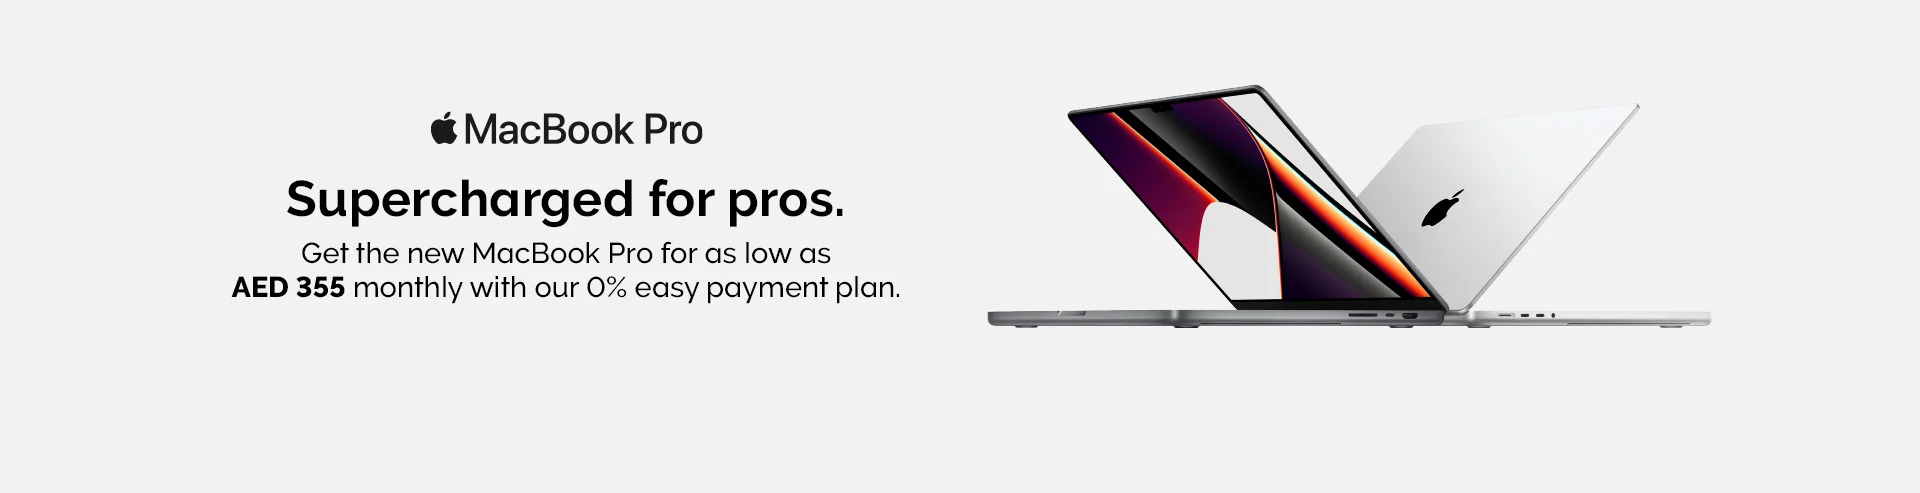 Full-Width-Large-MacBook-Pro-Supercharged-for-Pros-EPP-AE-Desktop.webp